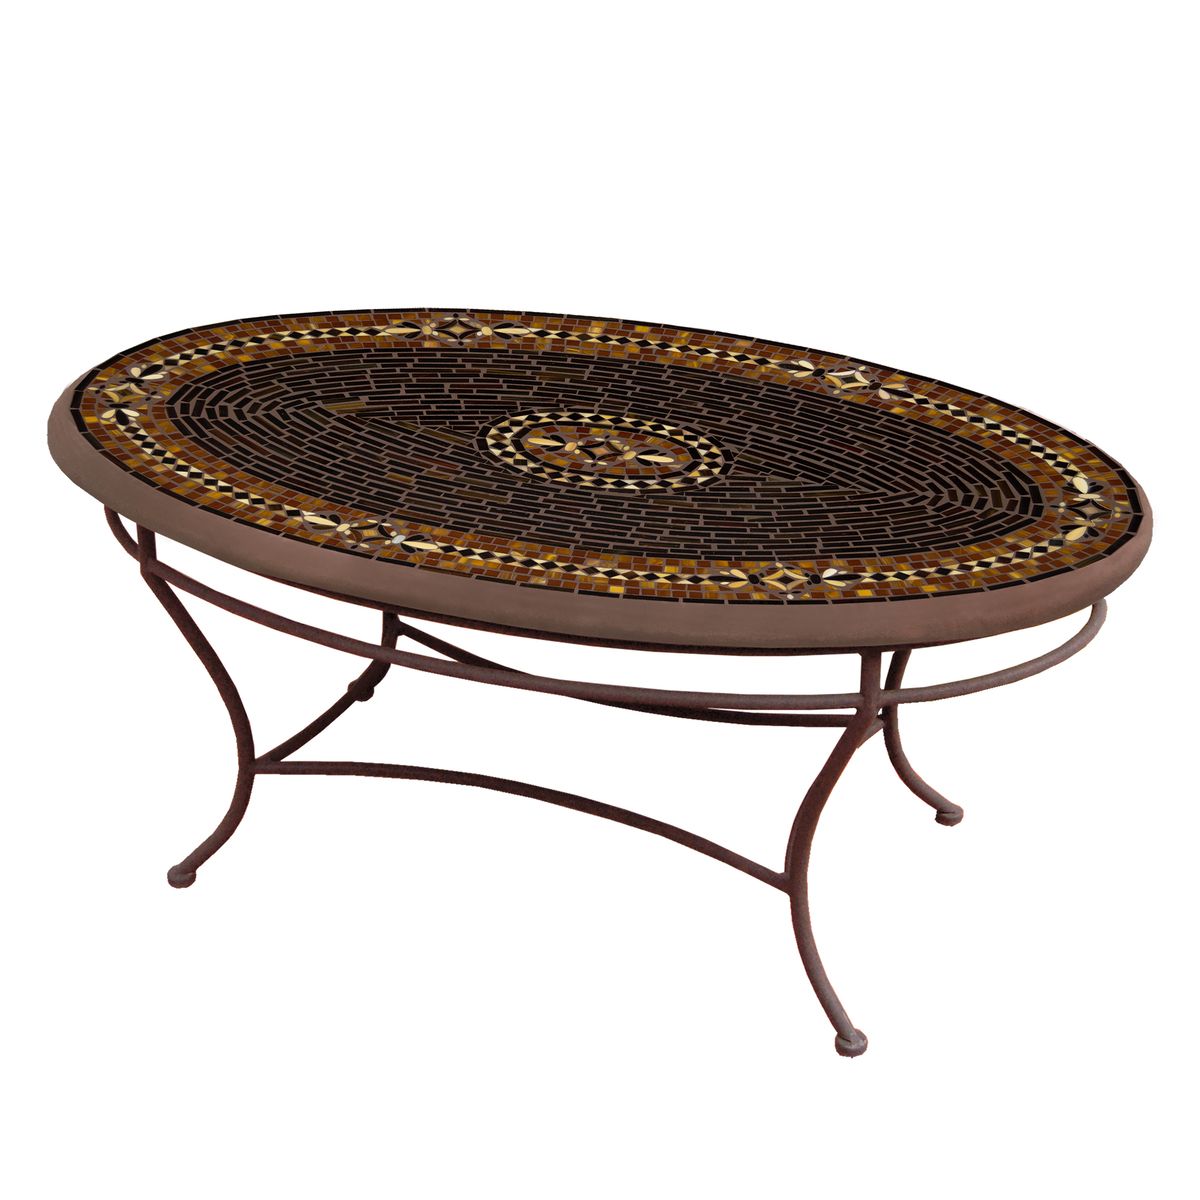 Mahogany Atlas Mosaic Coffee Table - Oval-Iron Accents